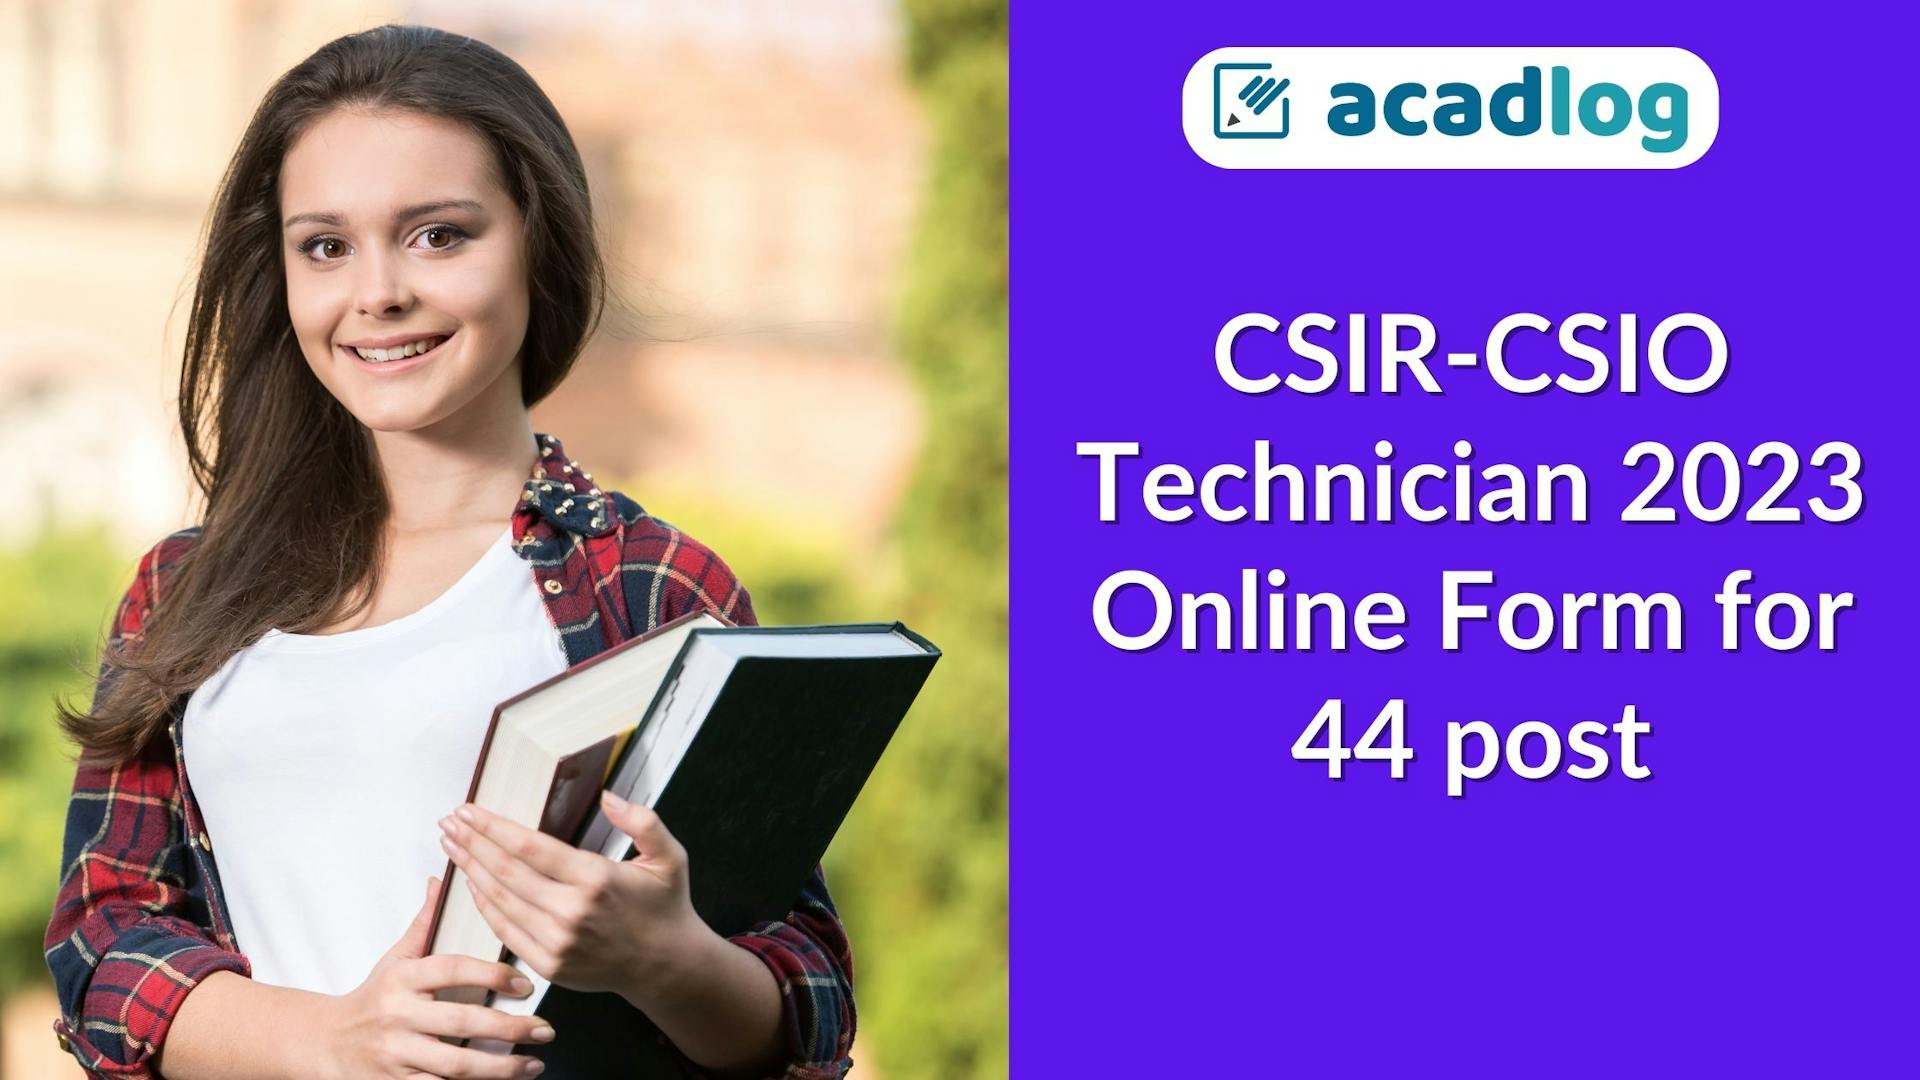 CSIR-CSIO Technician 2023 Online Form